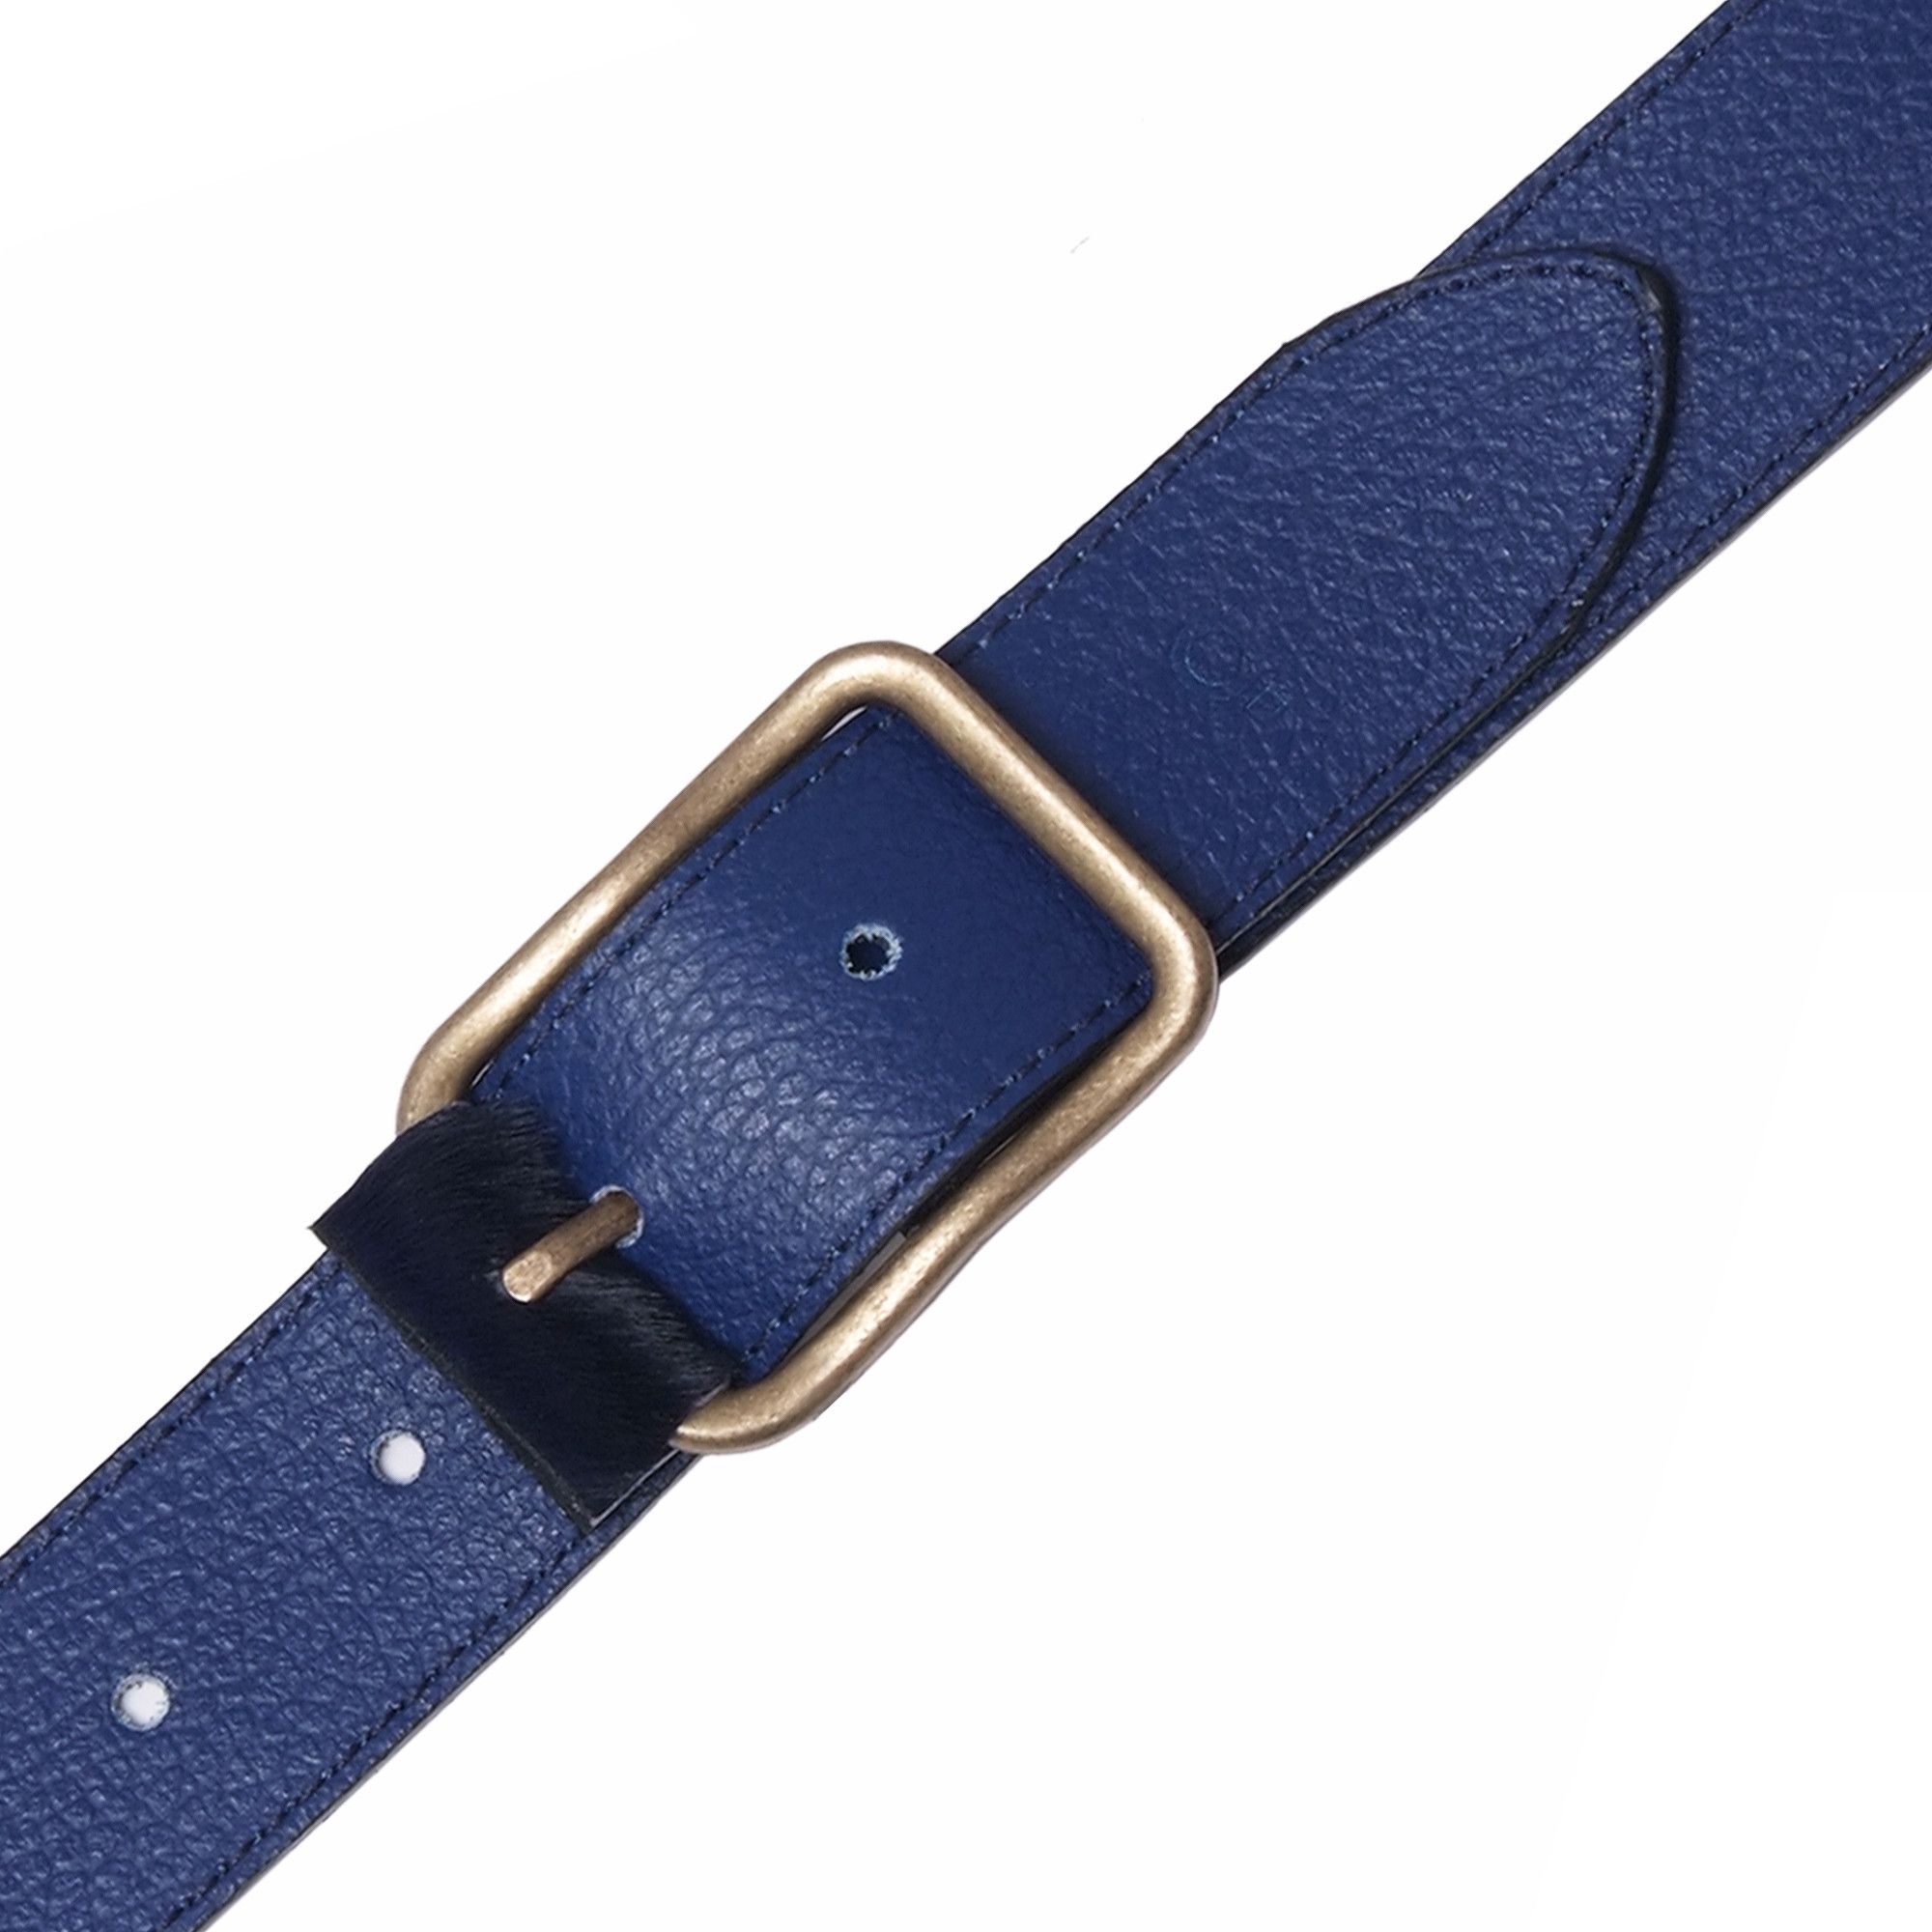 Womens Blue Leather Belt